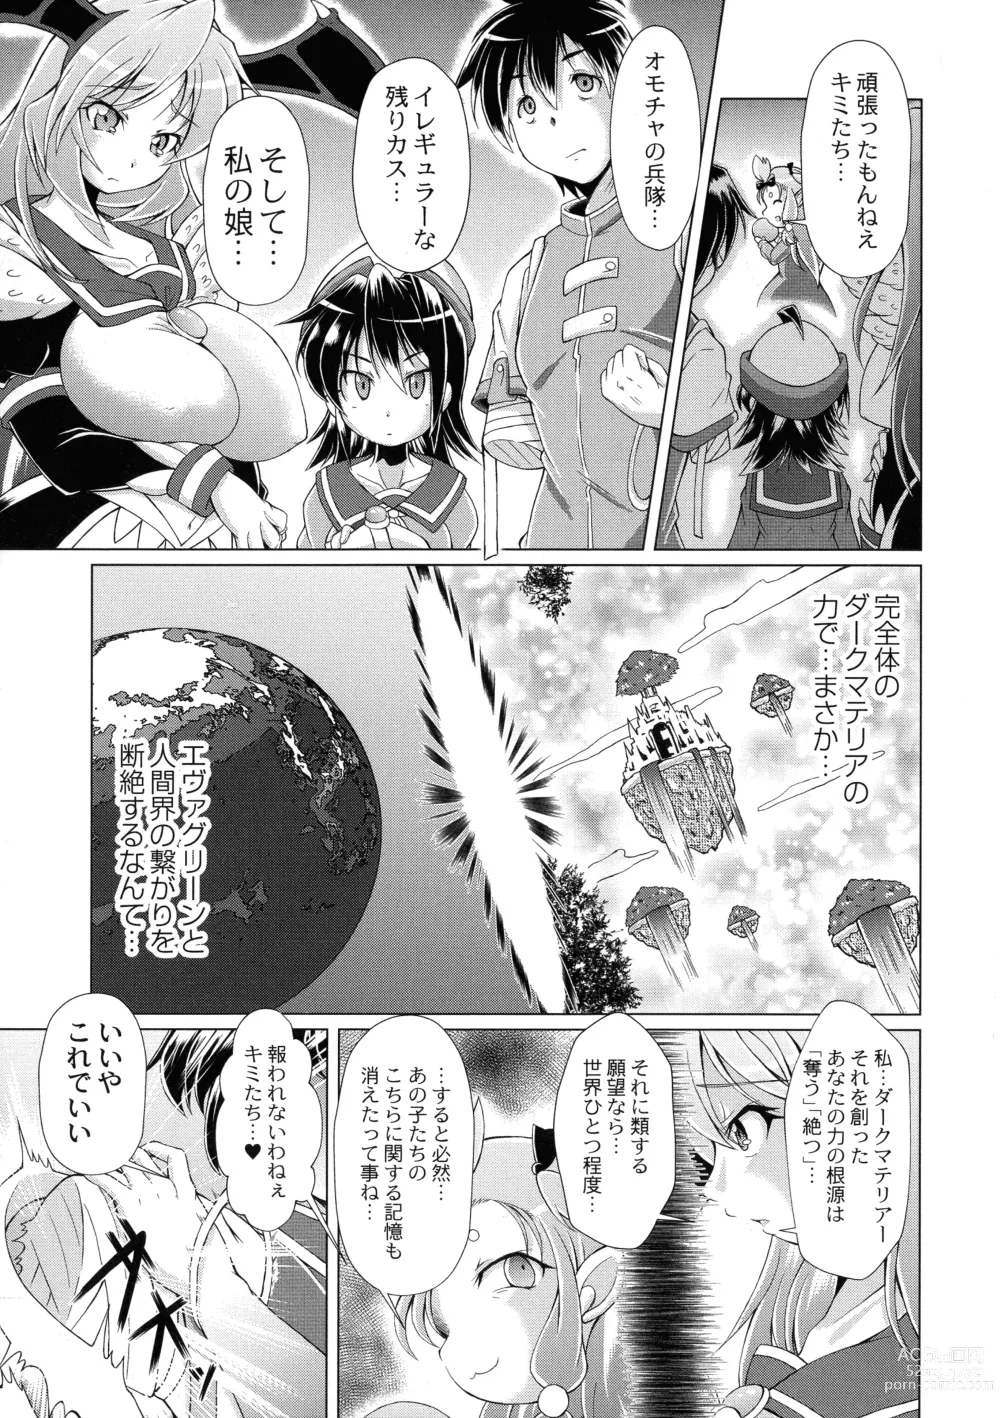 Page 195 of manga Magical Canaan Reboot